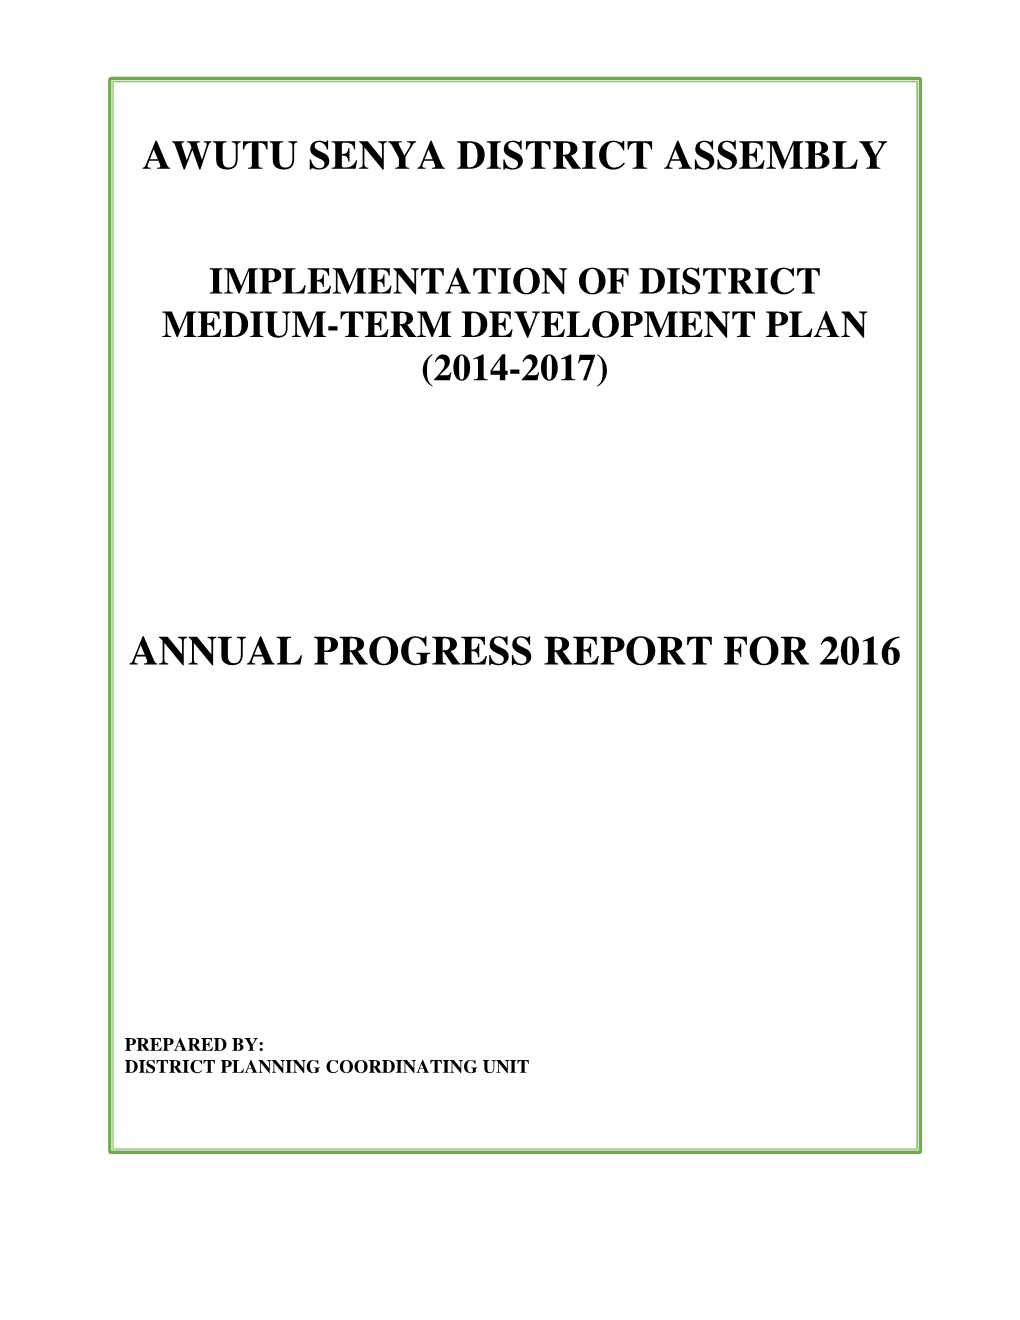 Awutu Senya District Assembly Annual Progress